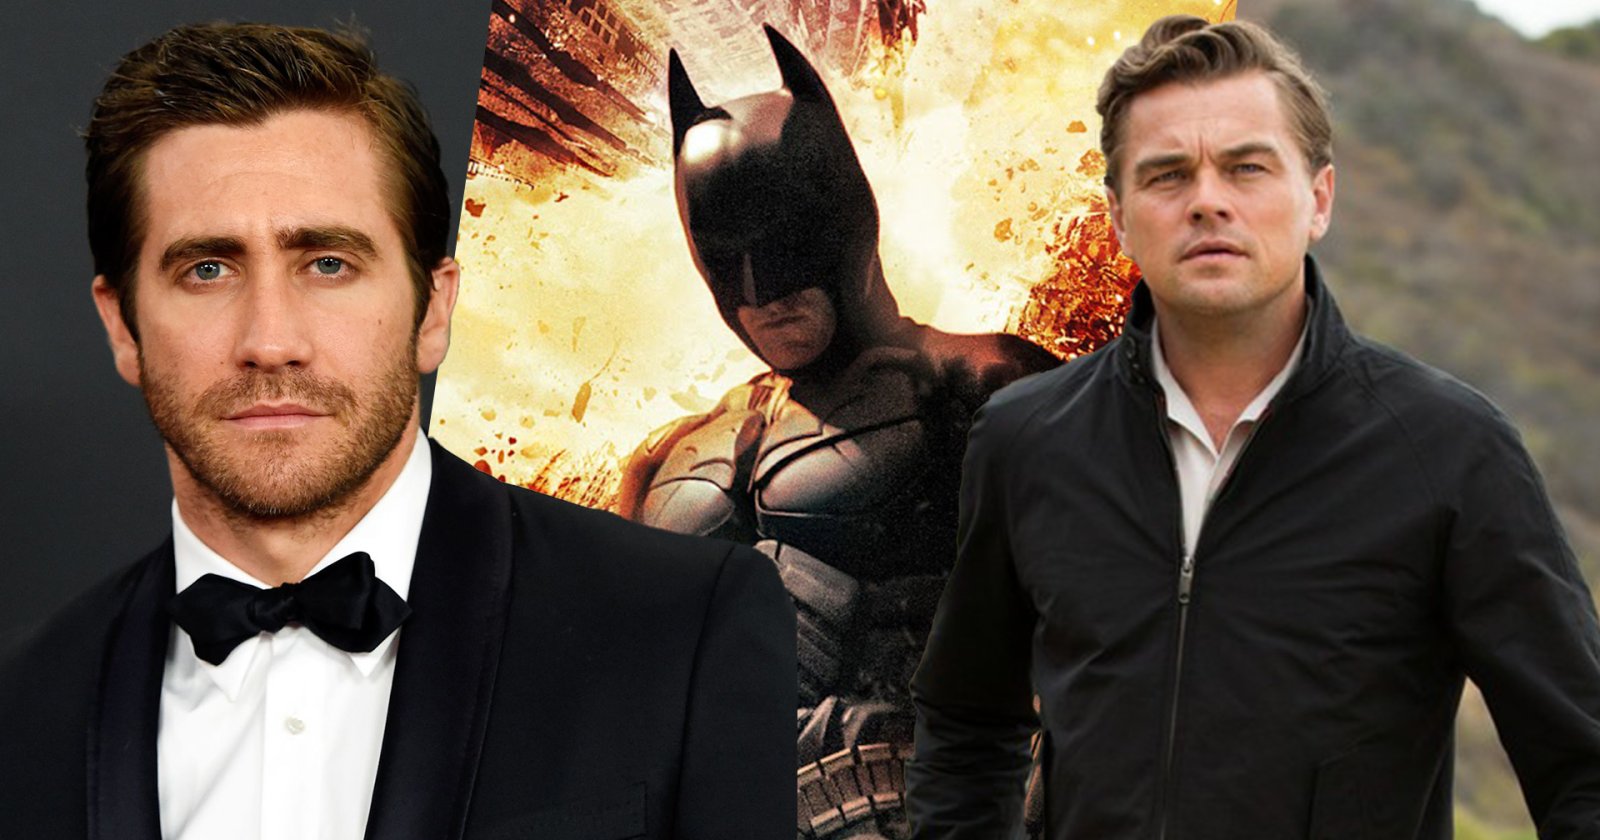 Jake Gyllenhaal เกือบได้เป็น Batman และ Leonardo DiCaprio เกือบได้เป็น Ridler ในไตรภาค ‘The Dark Knight’